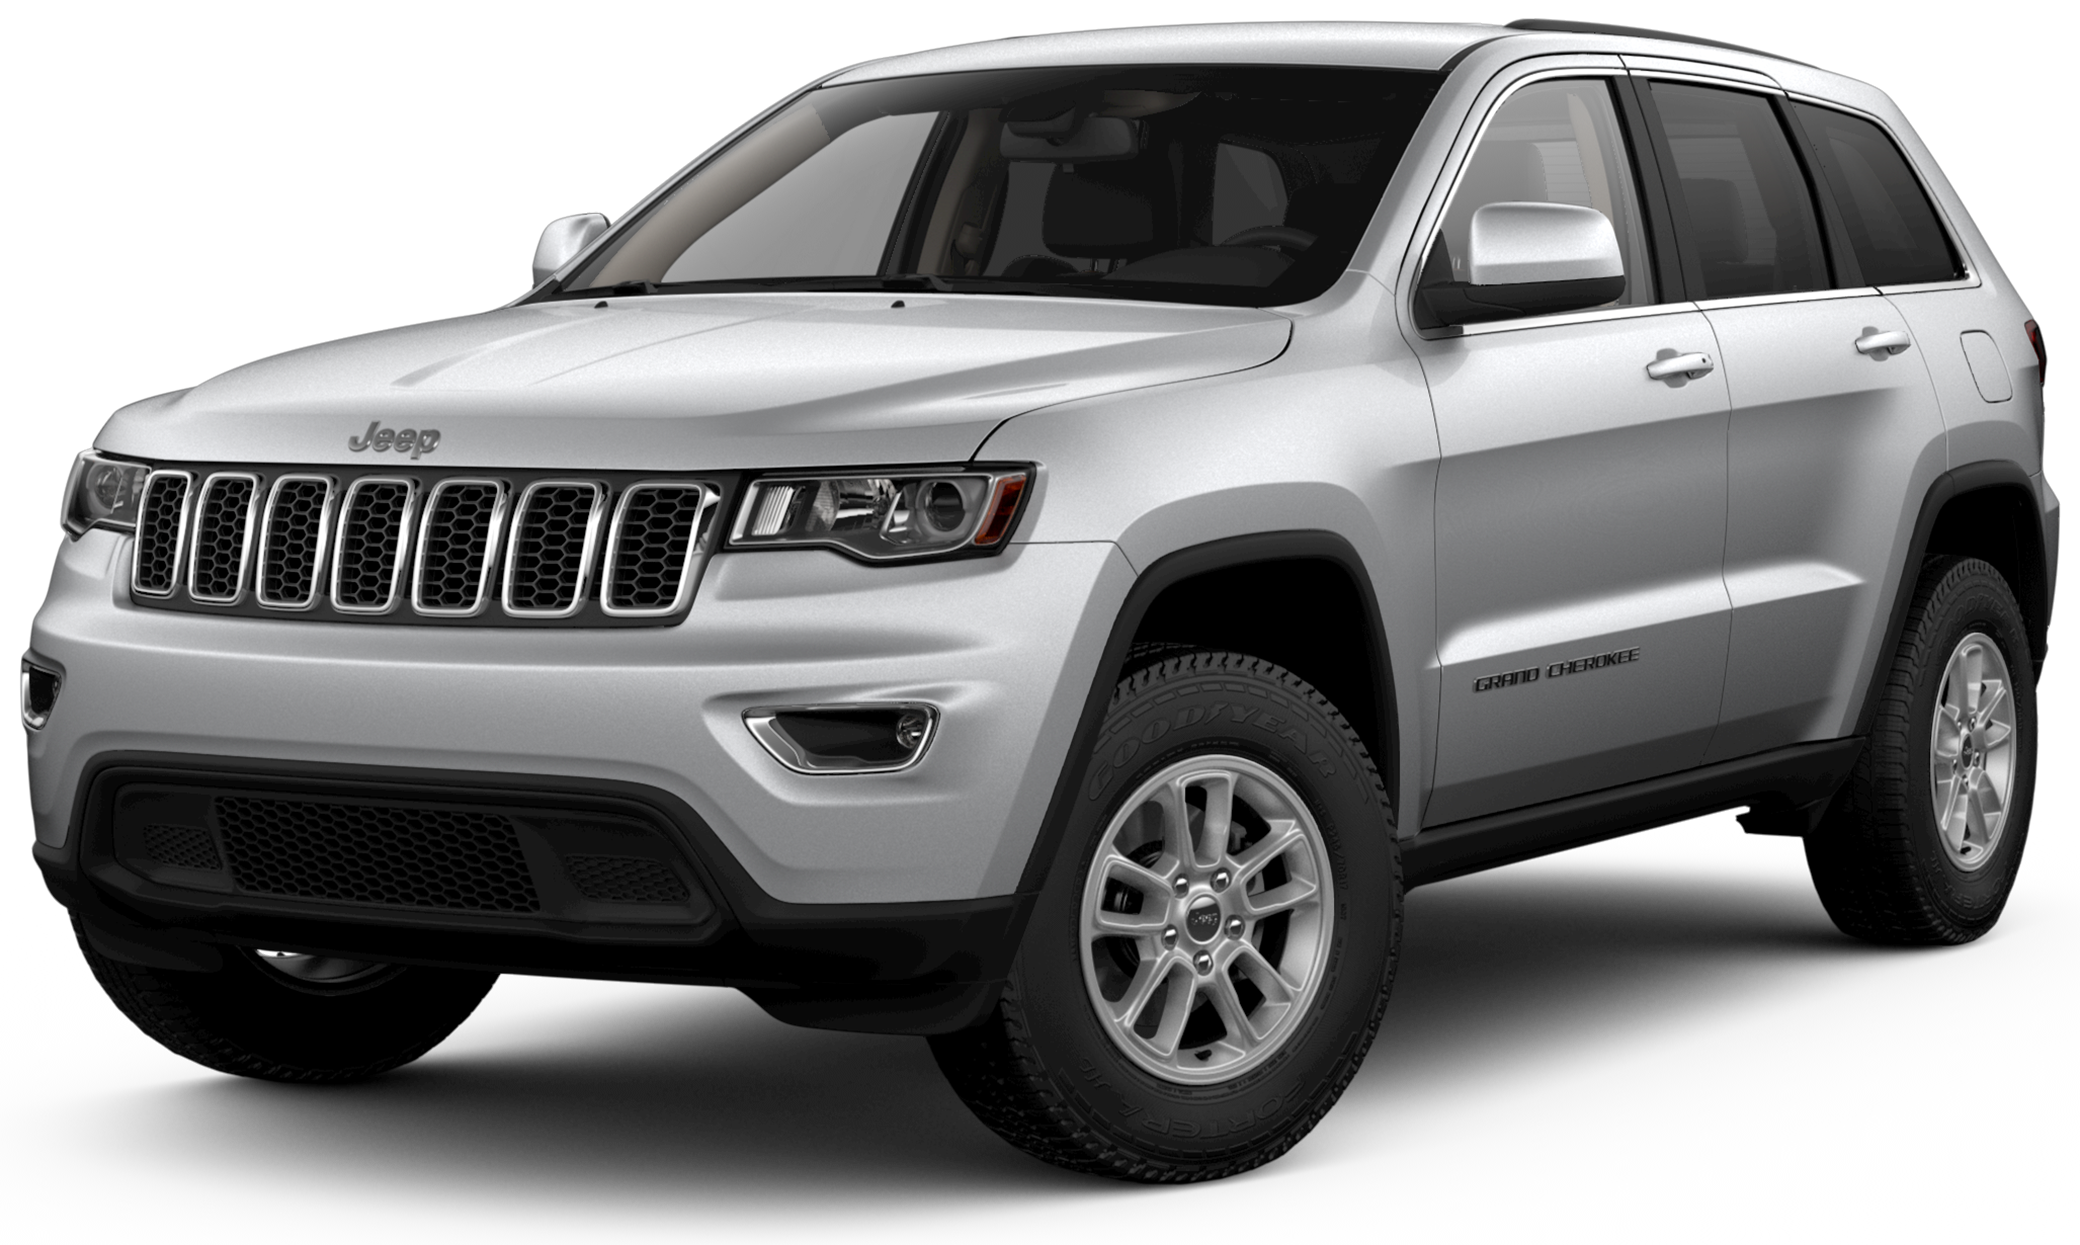 http://images.dealer.com/ddc/vehicles/2021/Jeep/Grand%20Cherokee/SUV/trim_Laredo_2bda58/perspective/front-left/2021_24.png